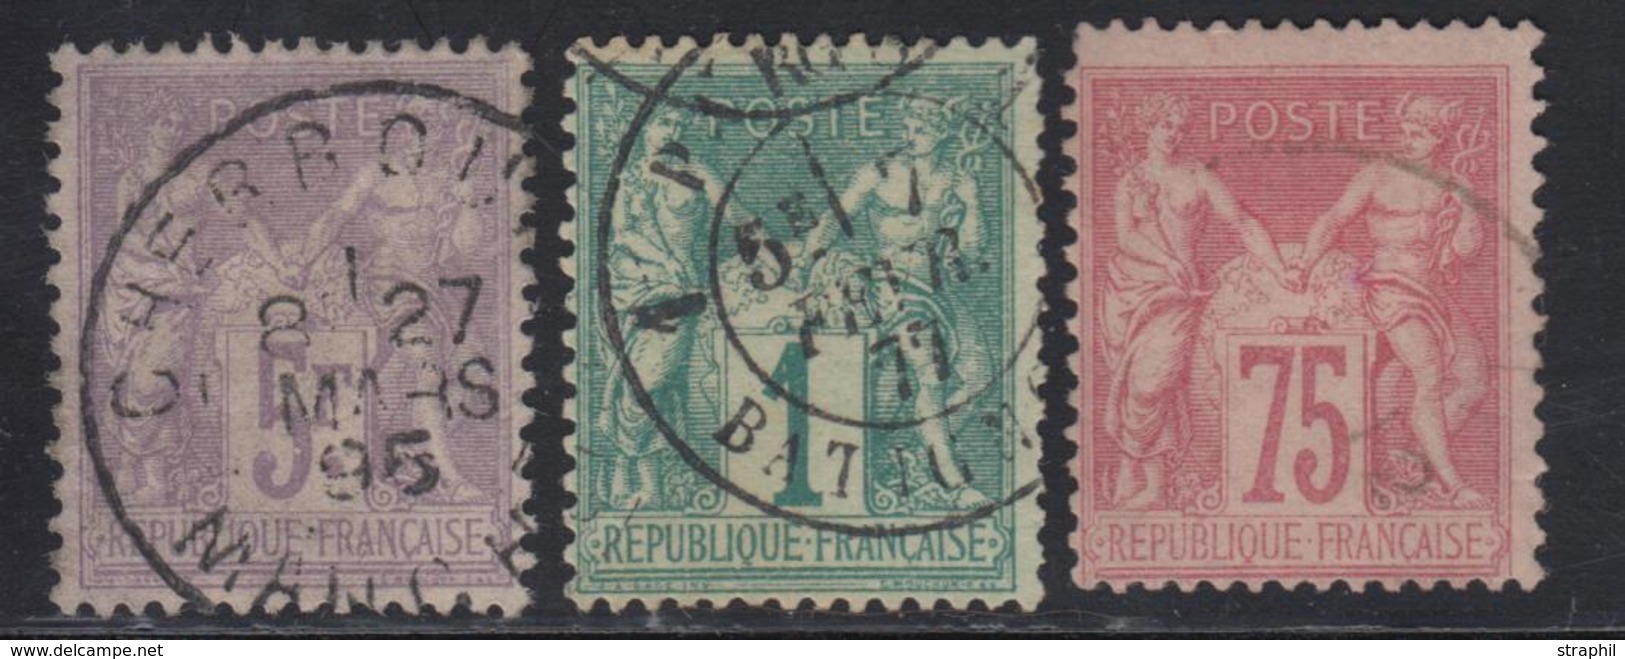 O TYPE SAGE - O - N°61, 81, 95 - 3 Valeurs - TB - Standard Postcards & Stamped On Demand (before 1995)